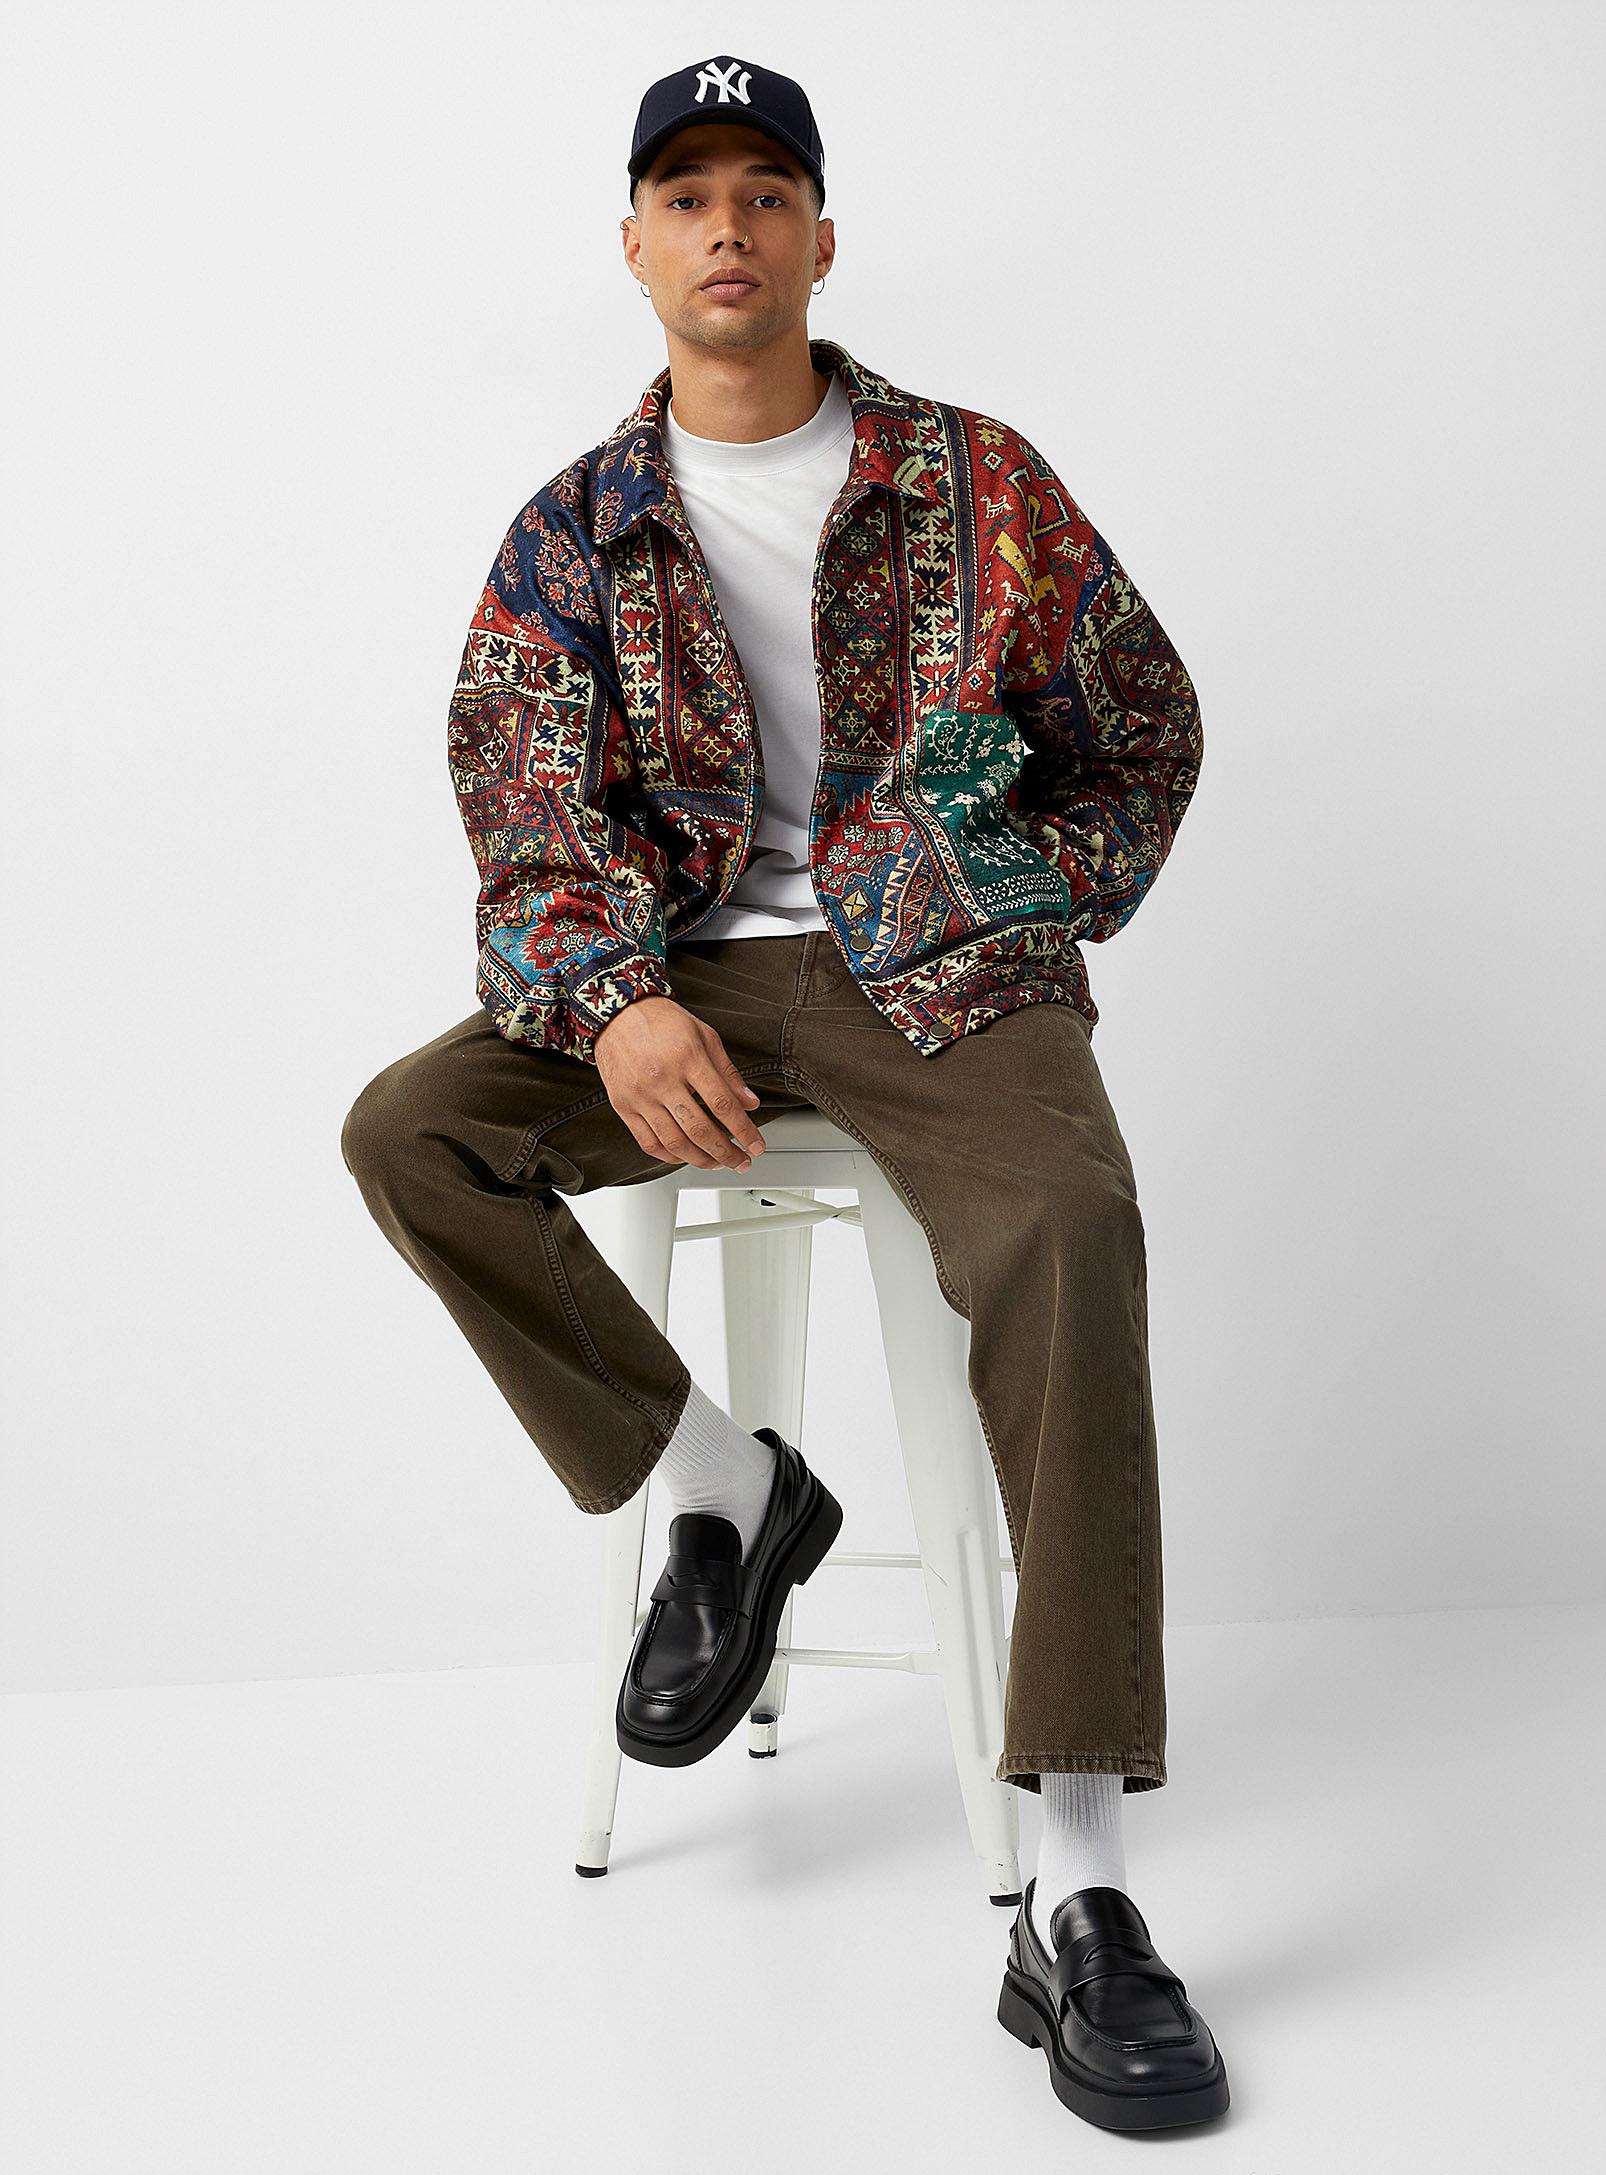 tapestry shearling jacket